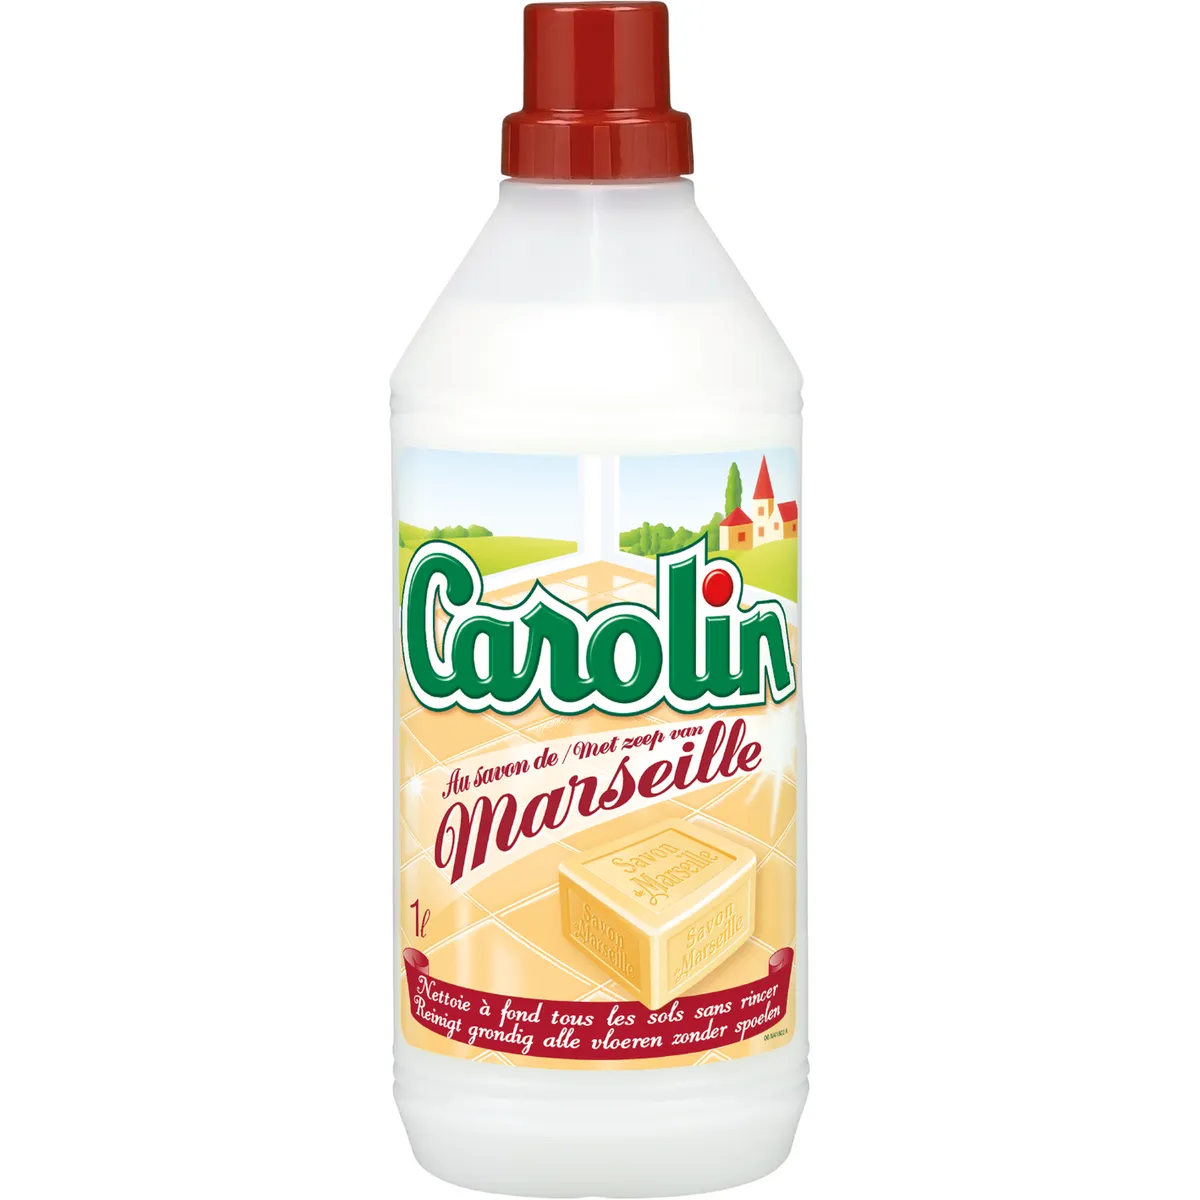 nettoyant ménager au savon de marseille carolin(1)